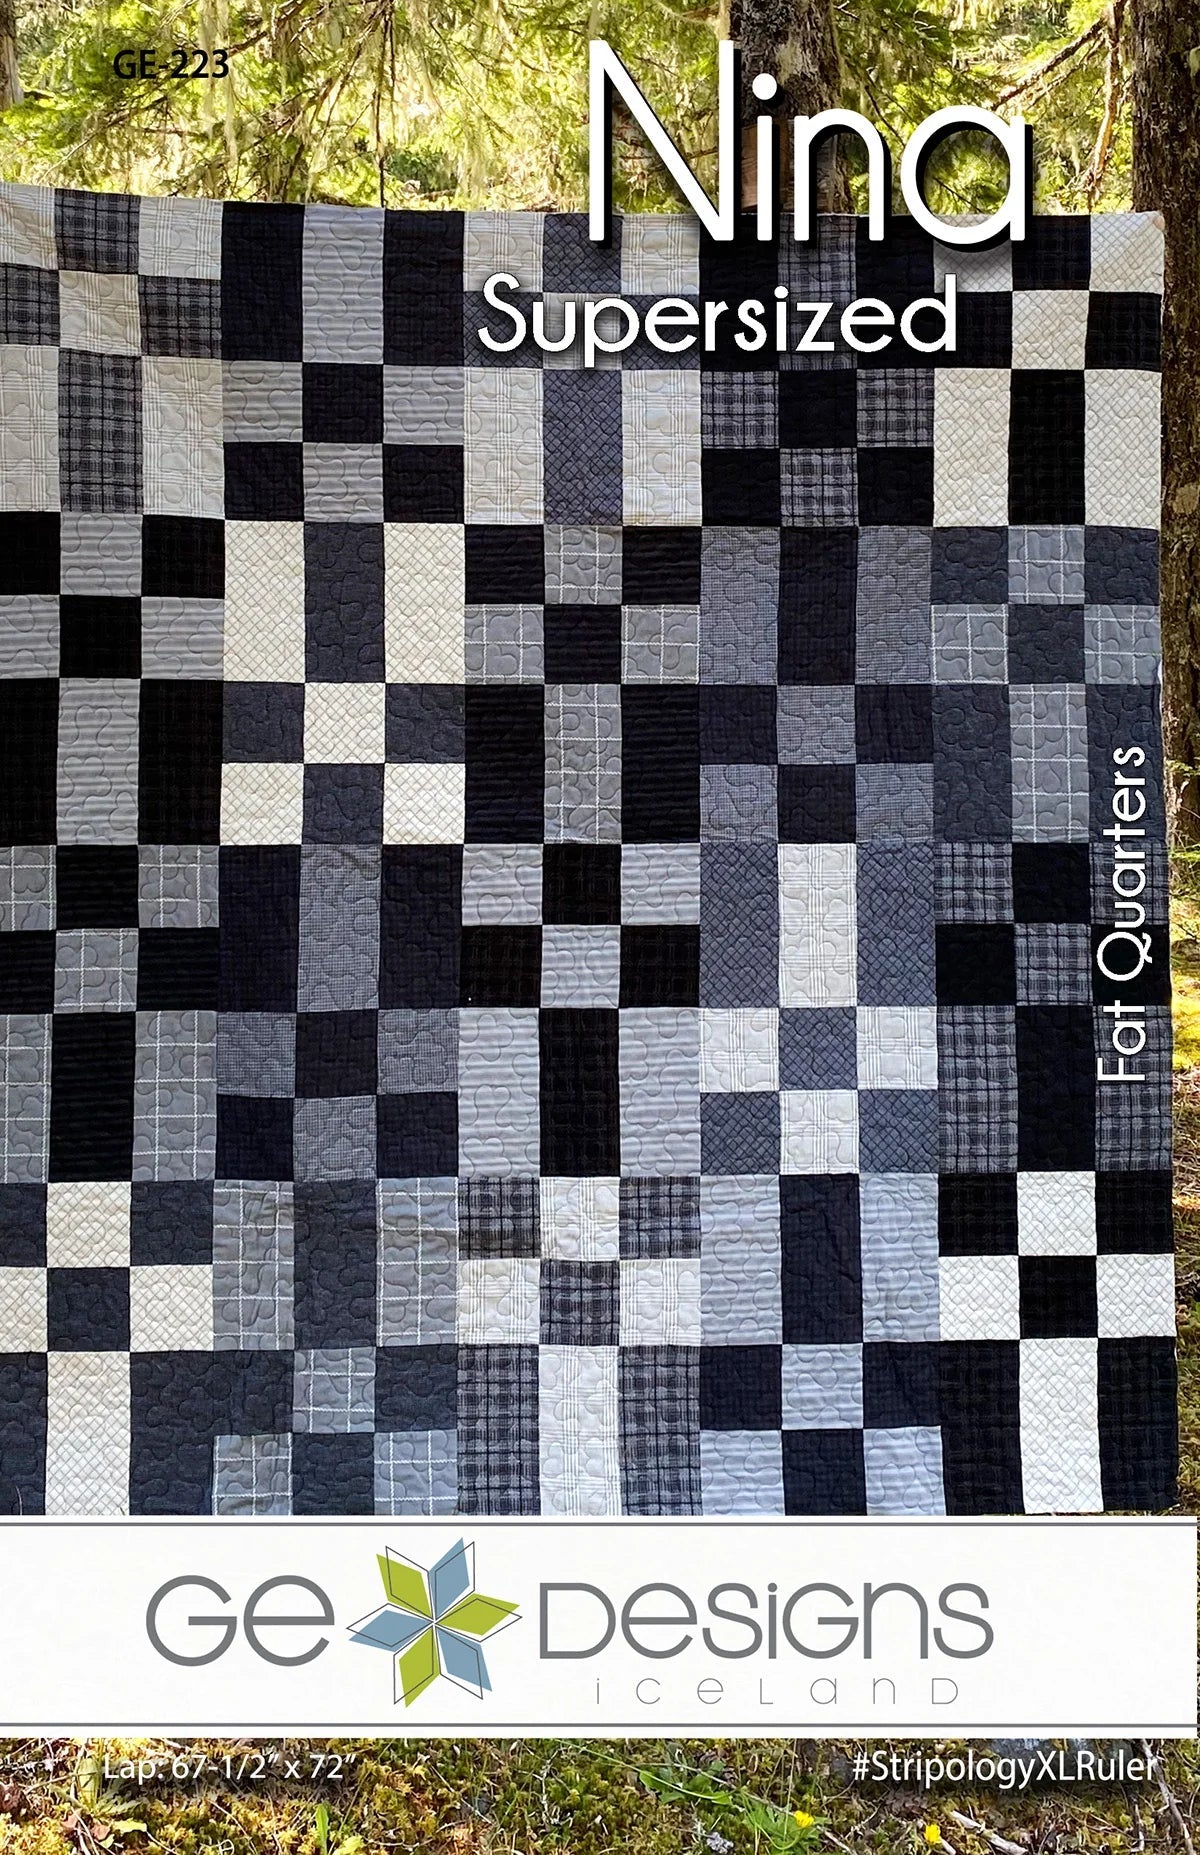 Nina Supersized Quilt Pattern by GE Designs - Jammin Threads